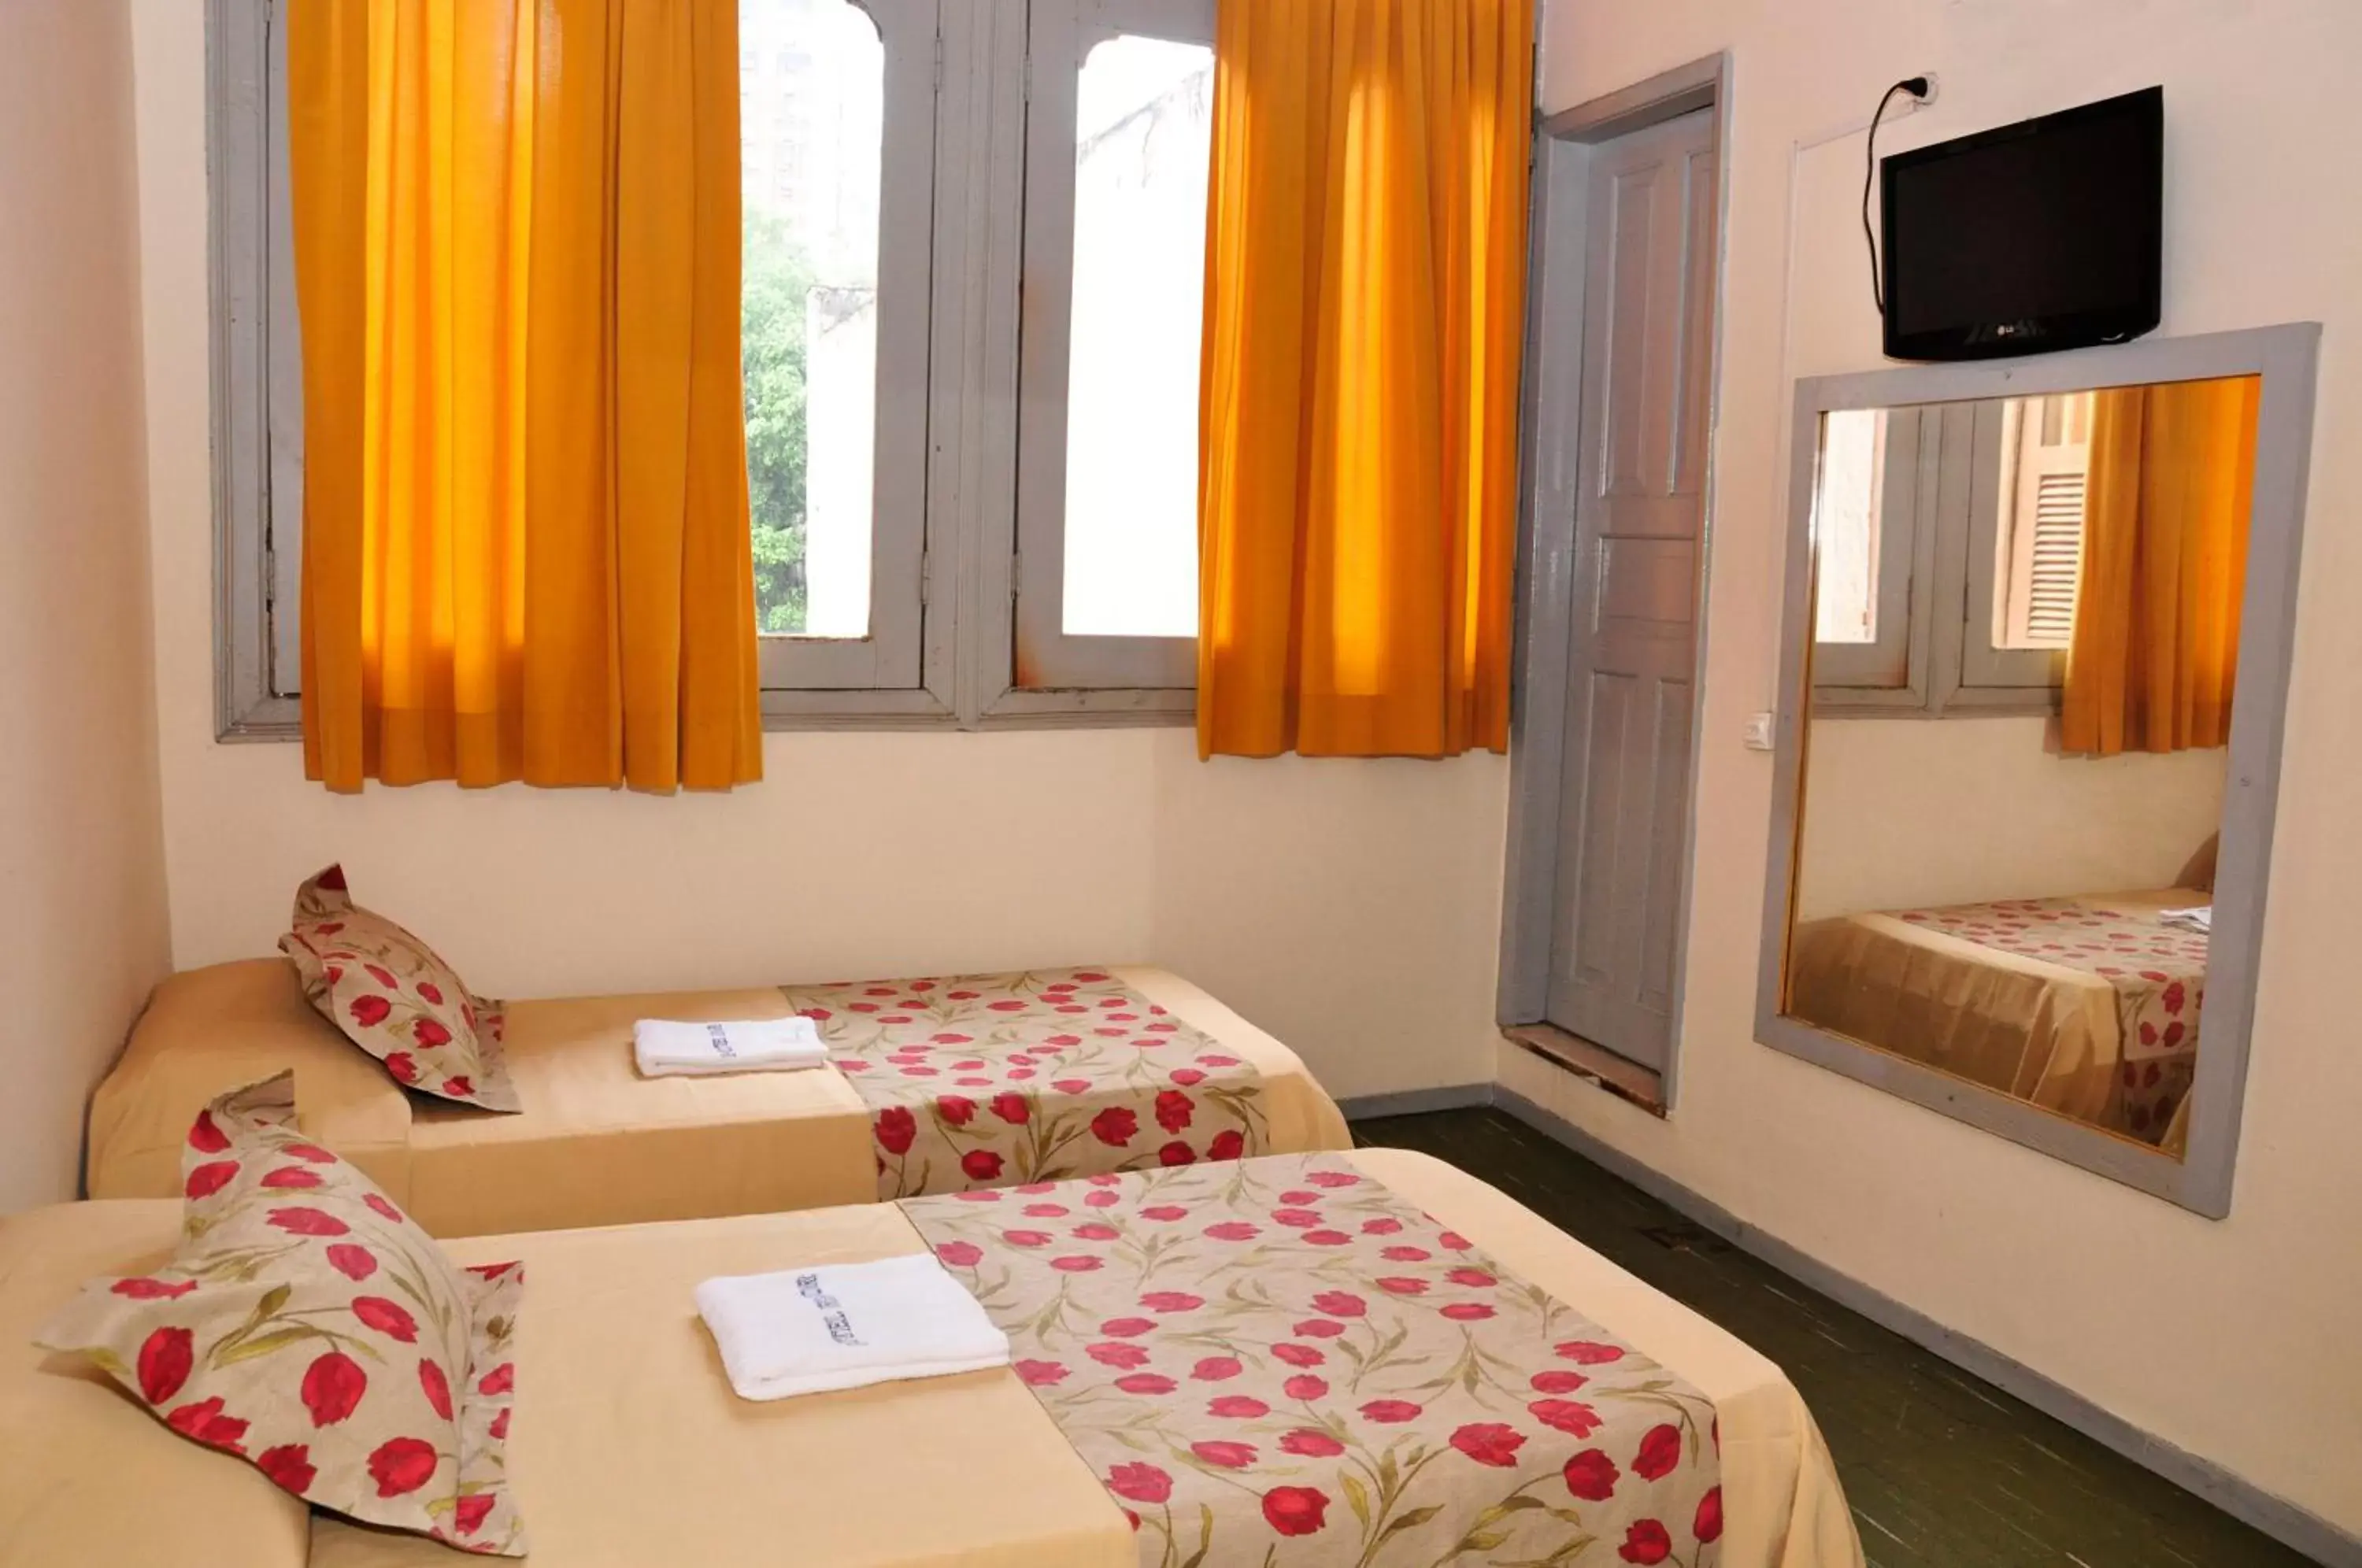 Bedroom, Room Photo in Hotel Plaza Riazor